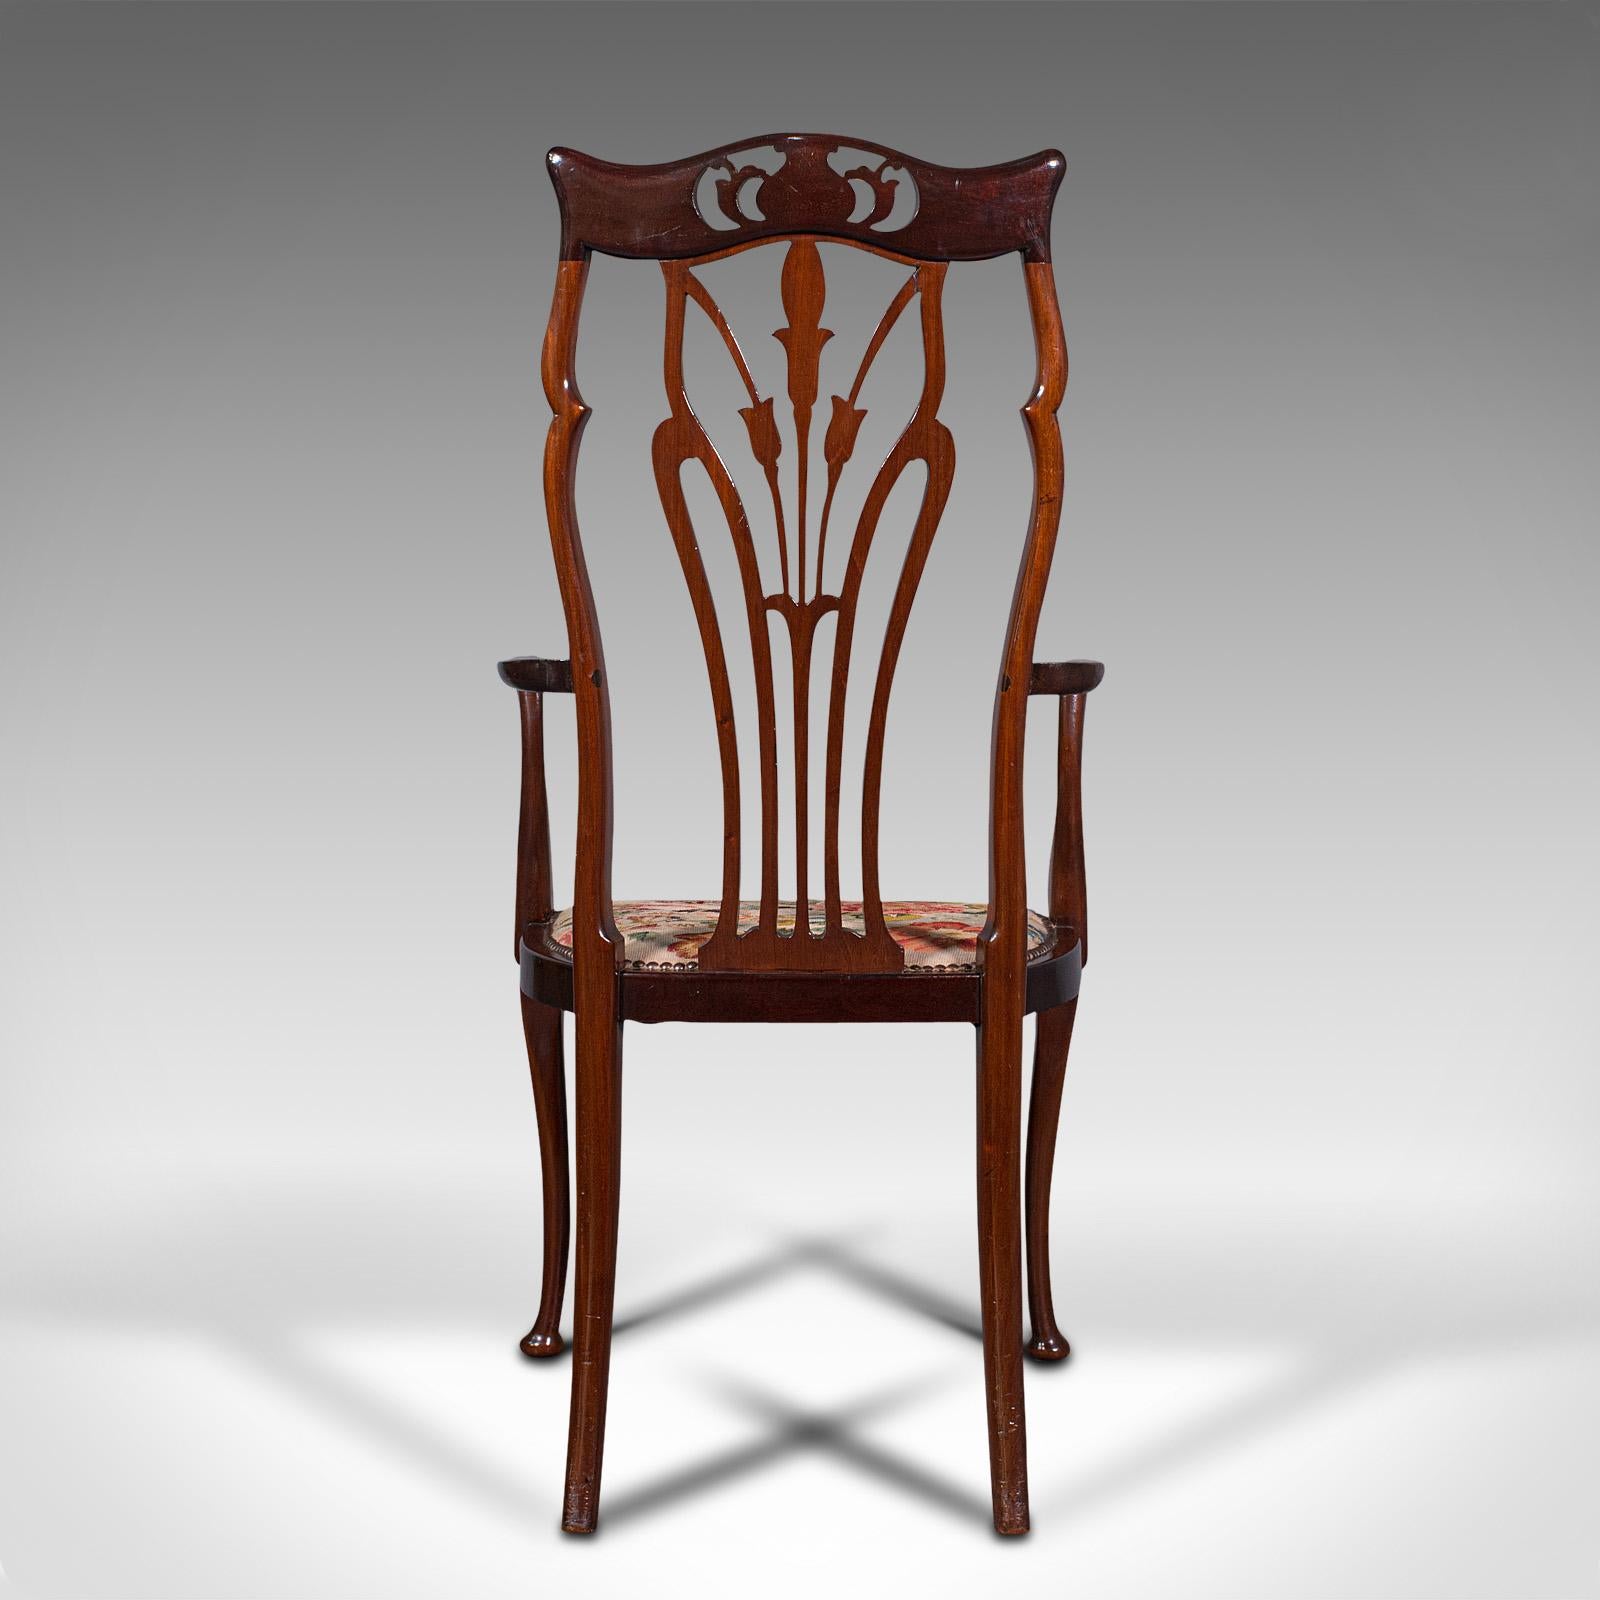 19th Century Antique Elbow Chair, English, Occasional, Art Nouveau, Libertyesque, Victorian